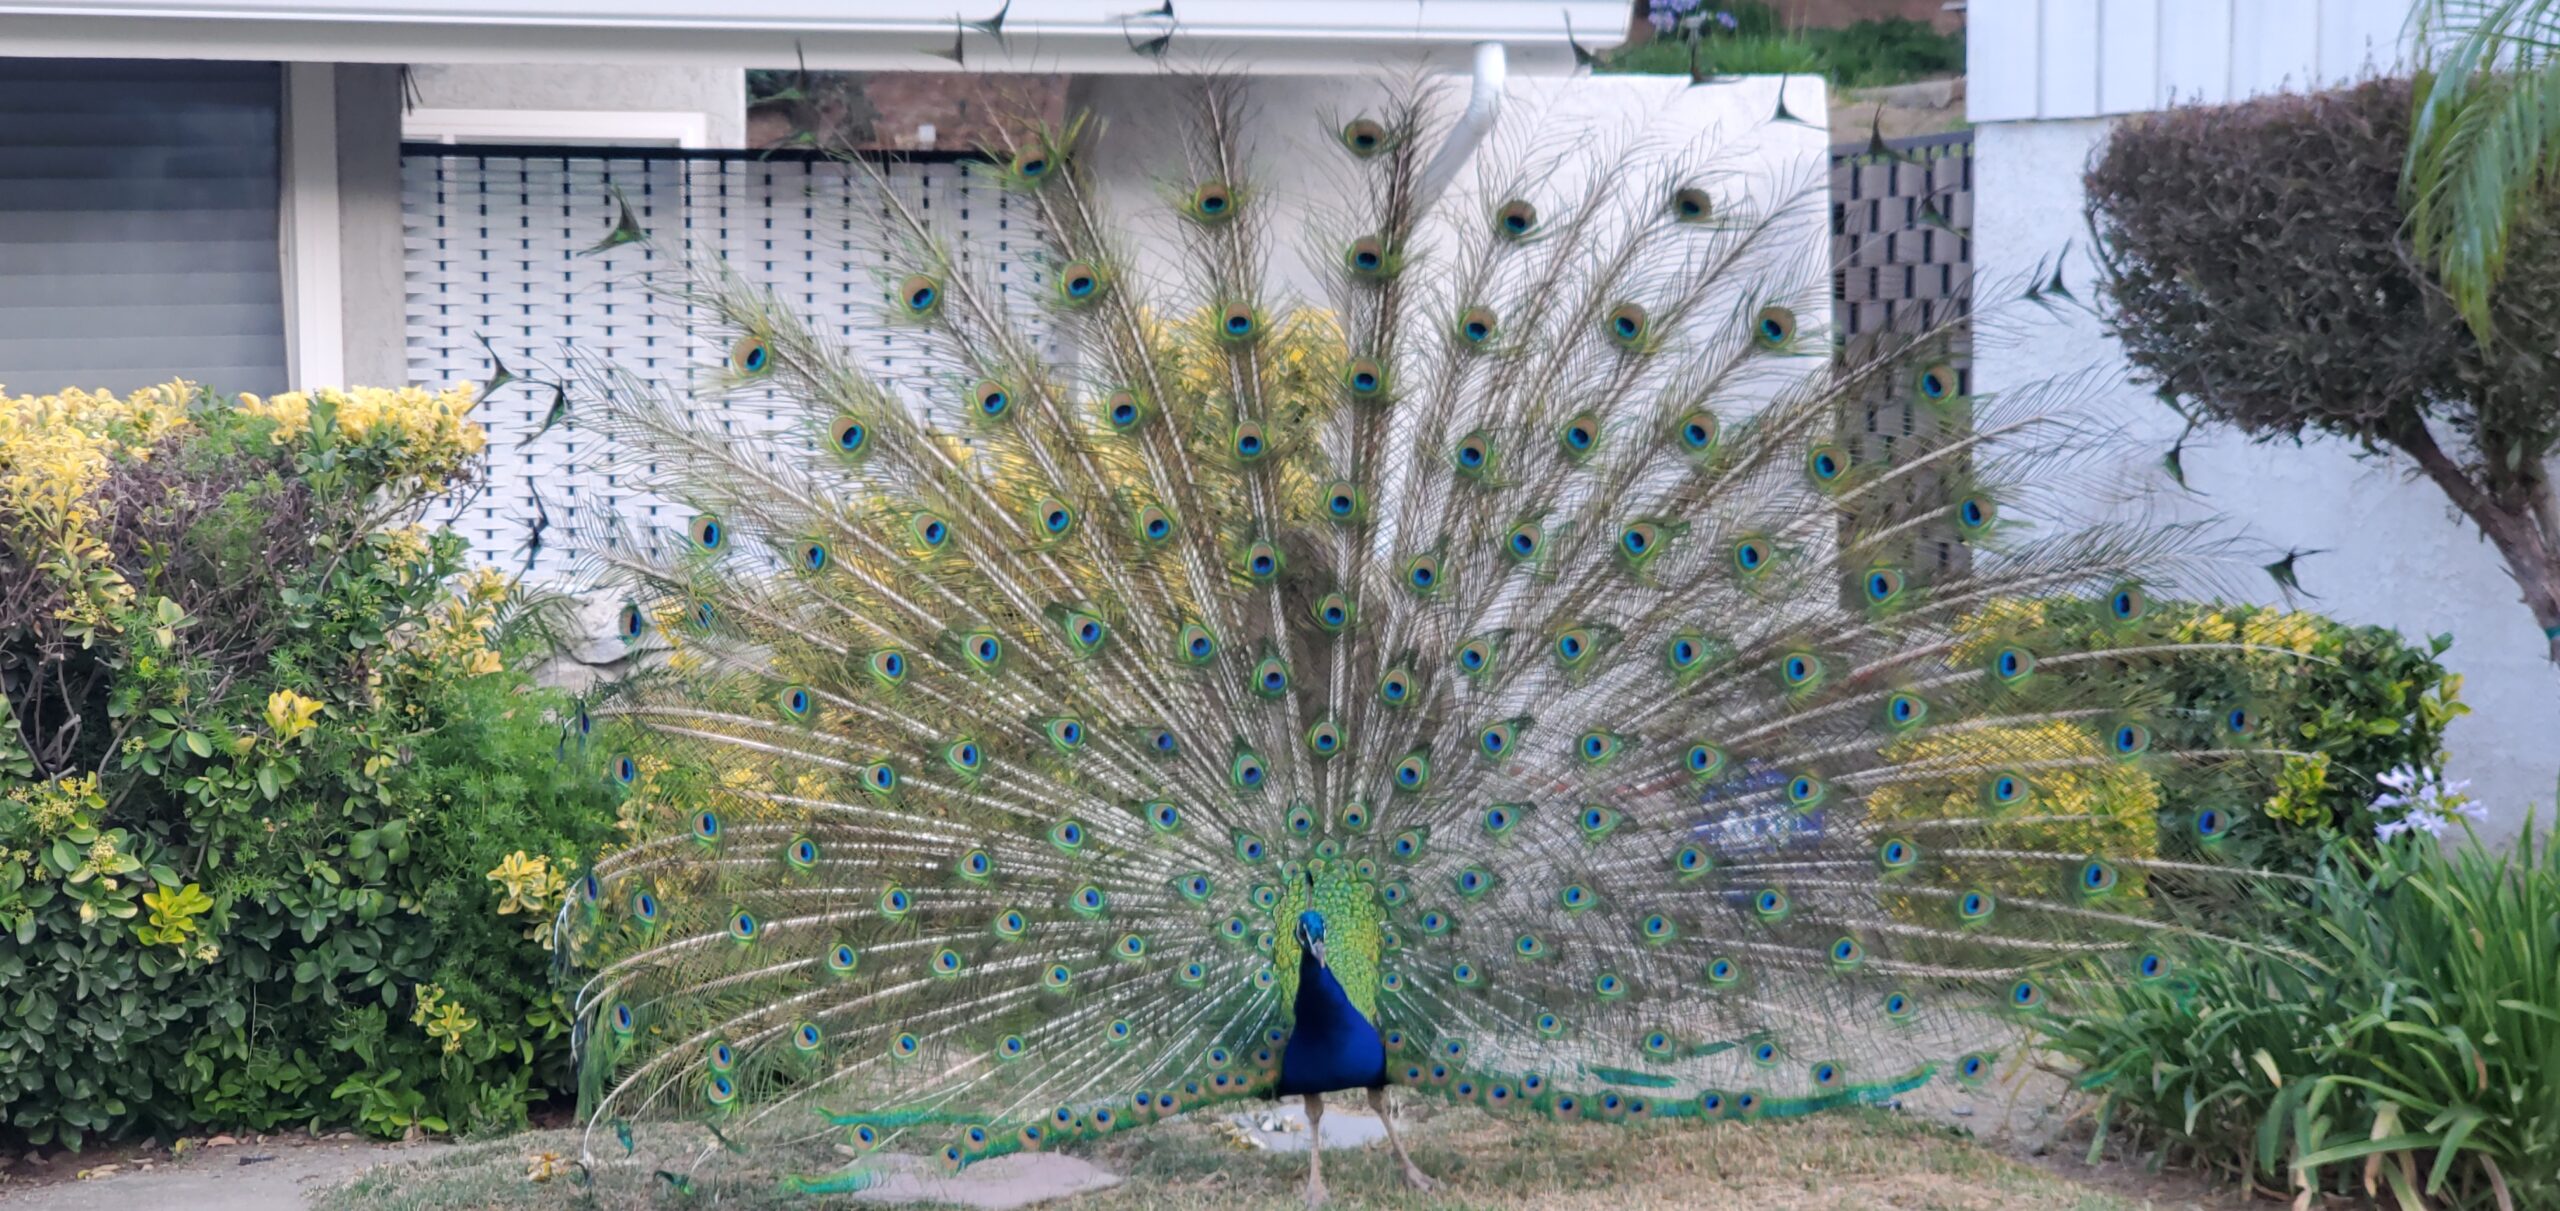 Peacock Hunting